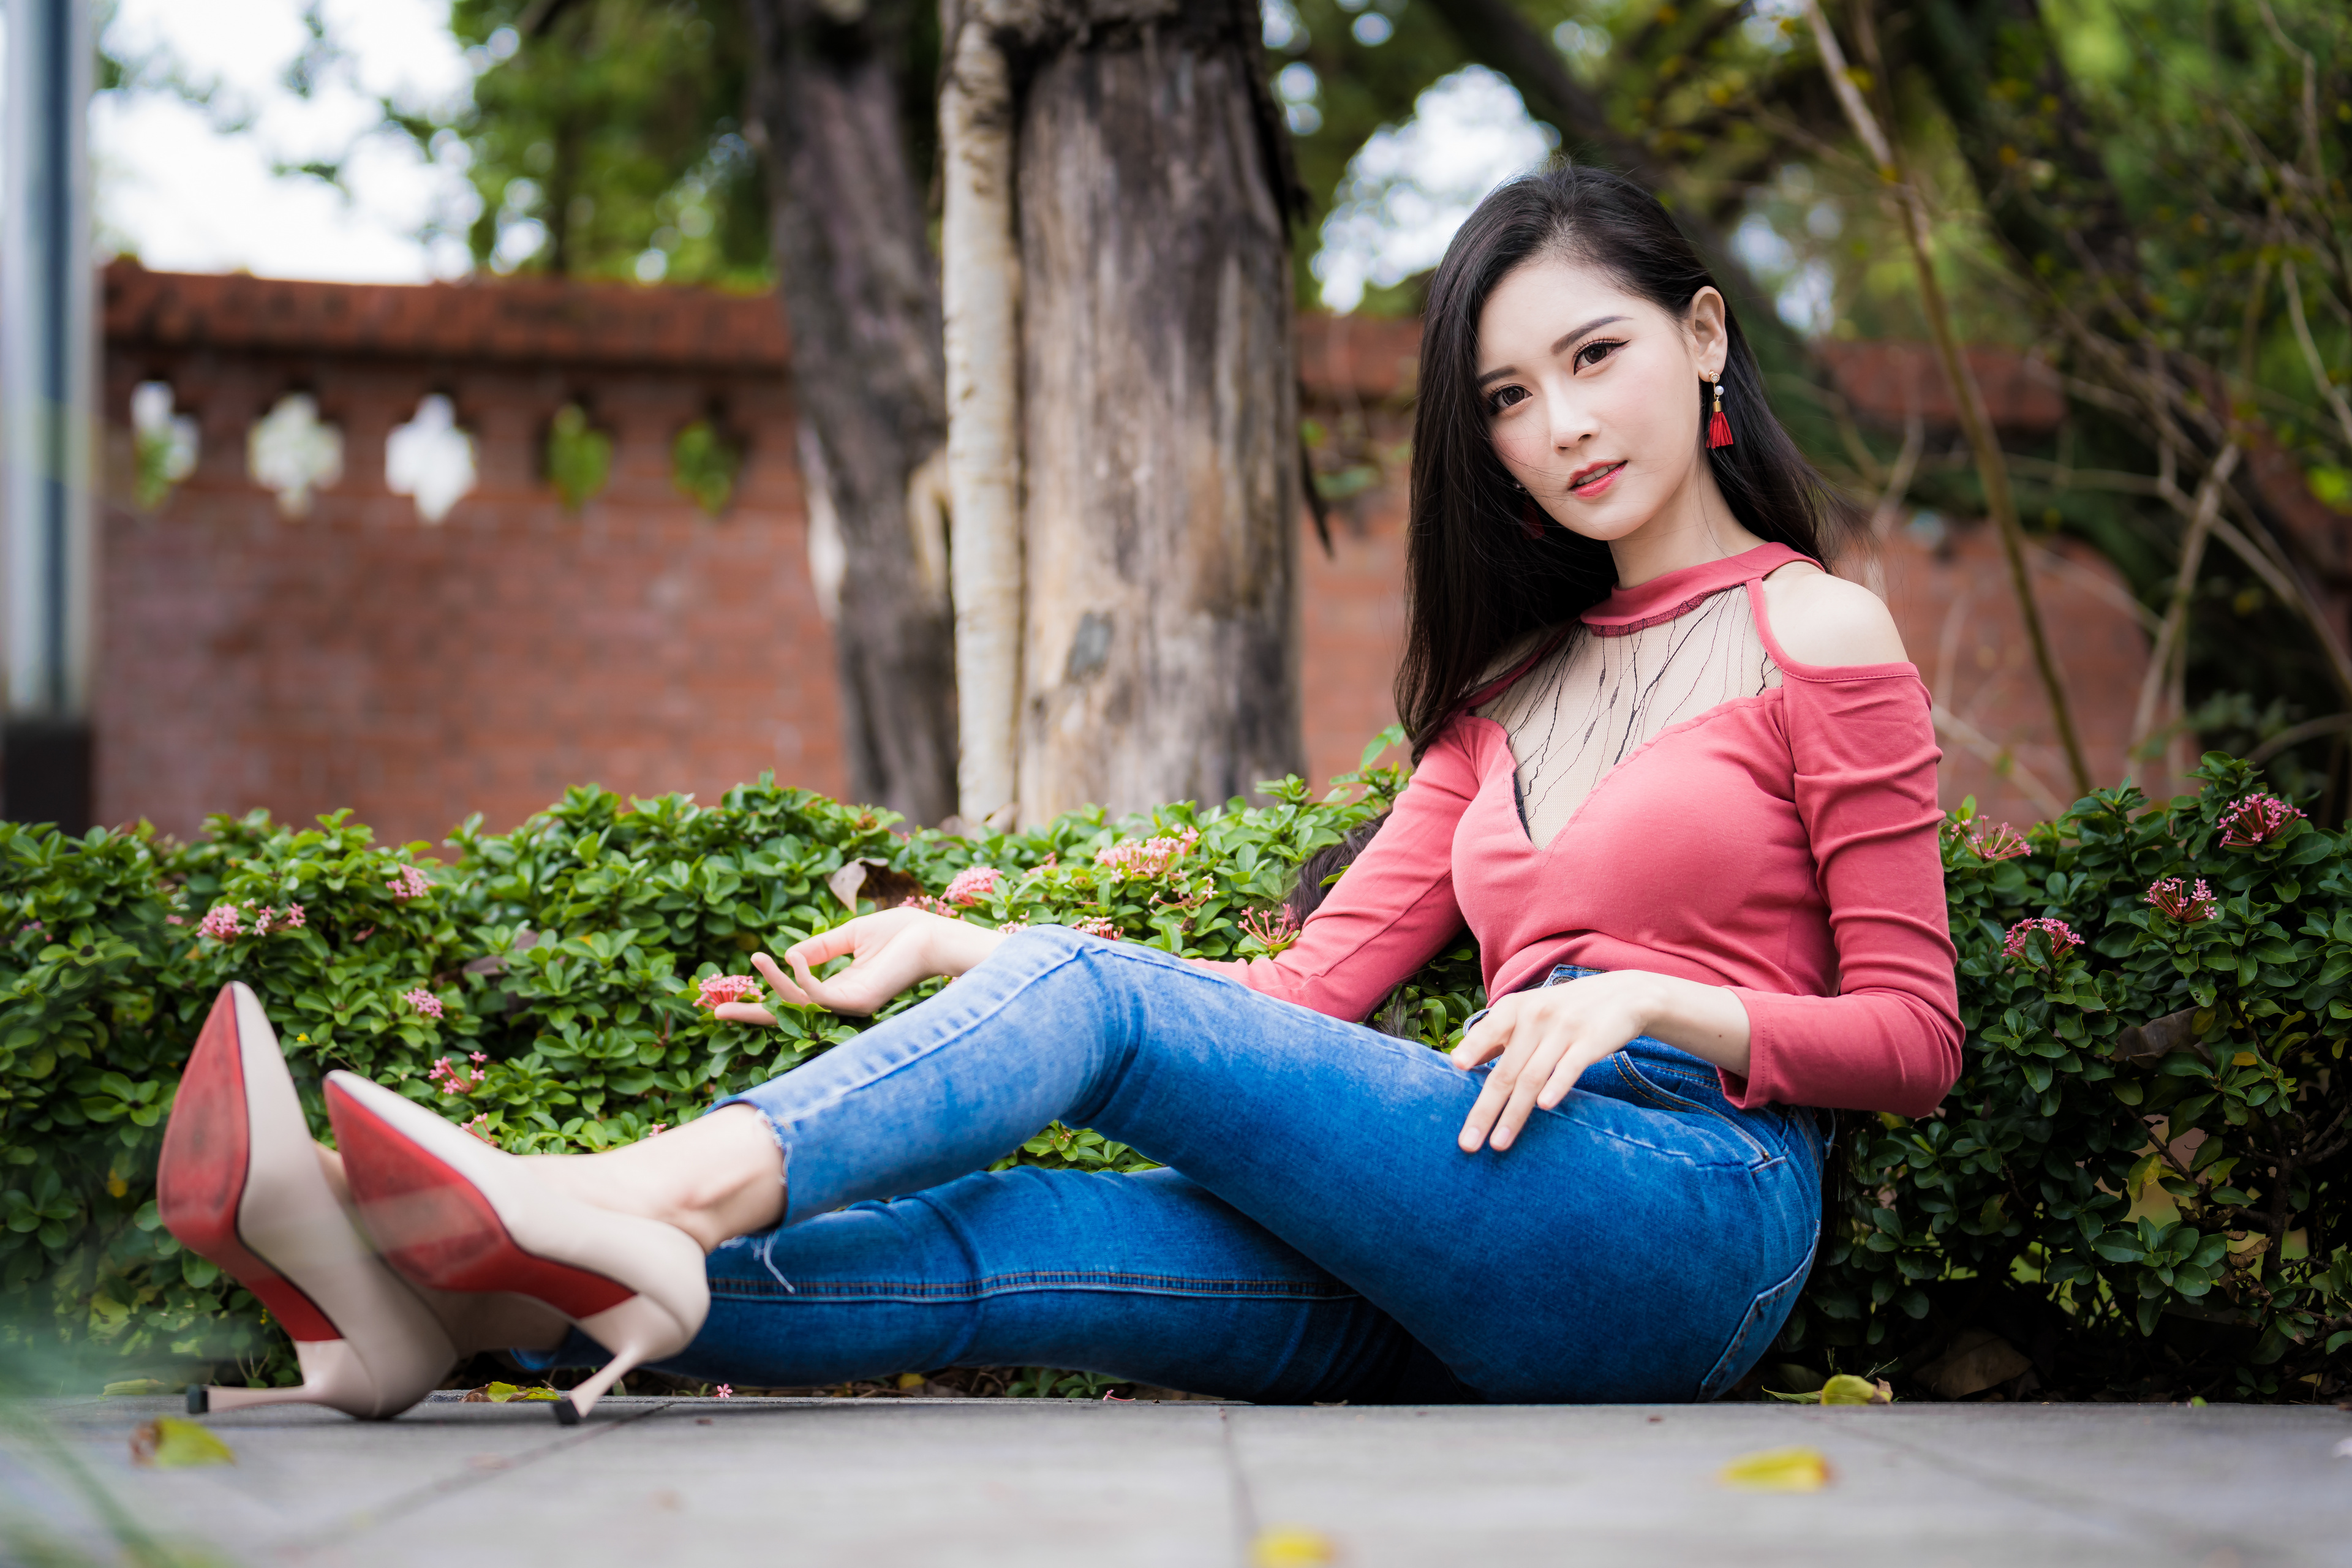 People 3840x2560 Asian model women long hair dark hair sitting jeans heels shirt bushes trees depth of field bricks wall earring